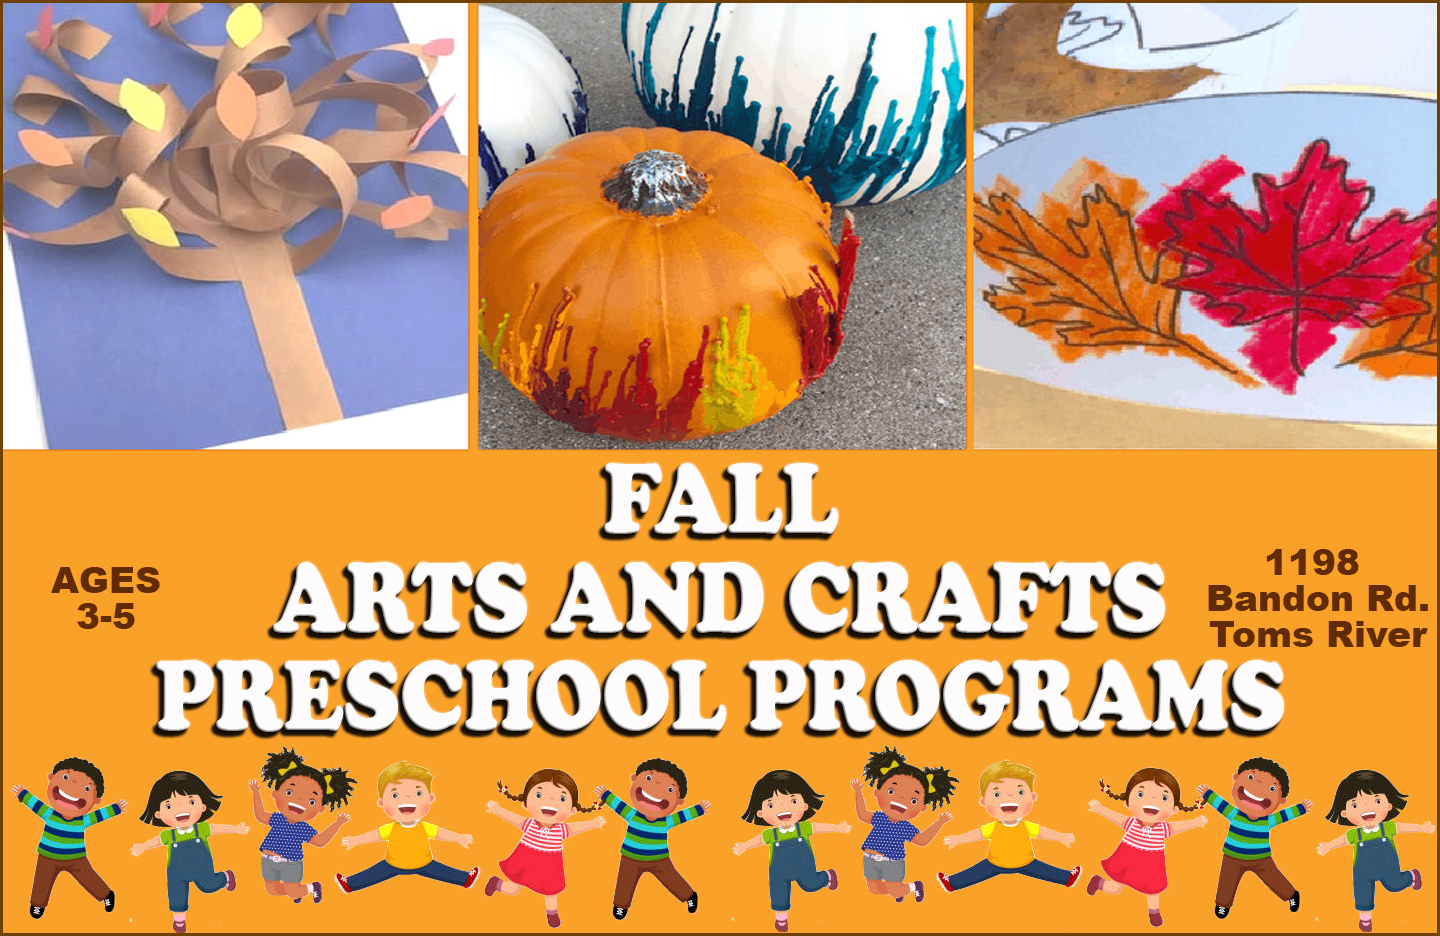 Ocean County Parks Arts and Crafts preschool program in Toms River, NJ